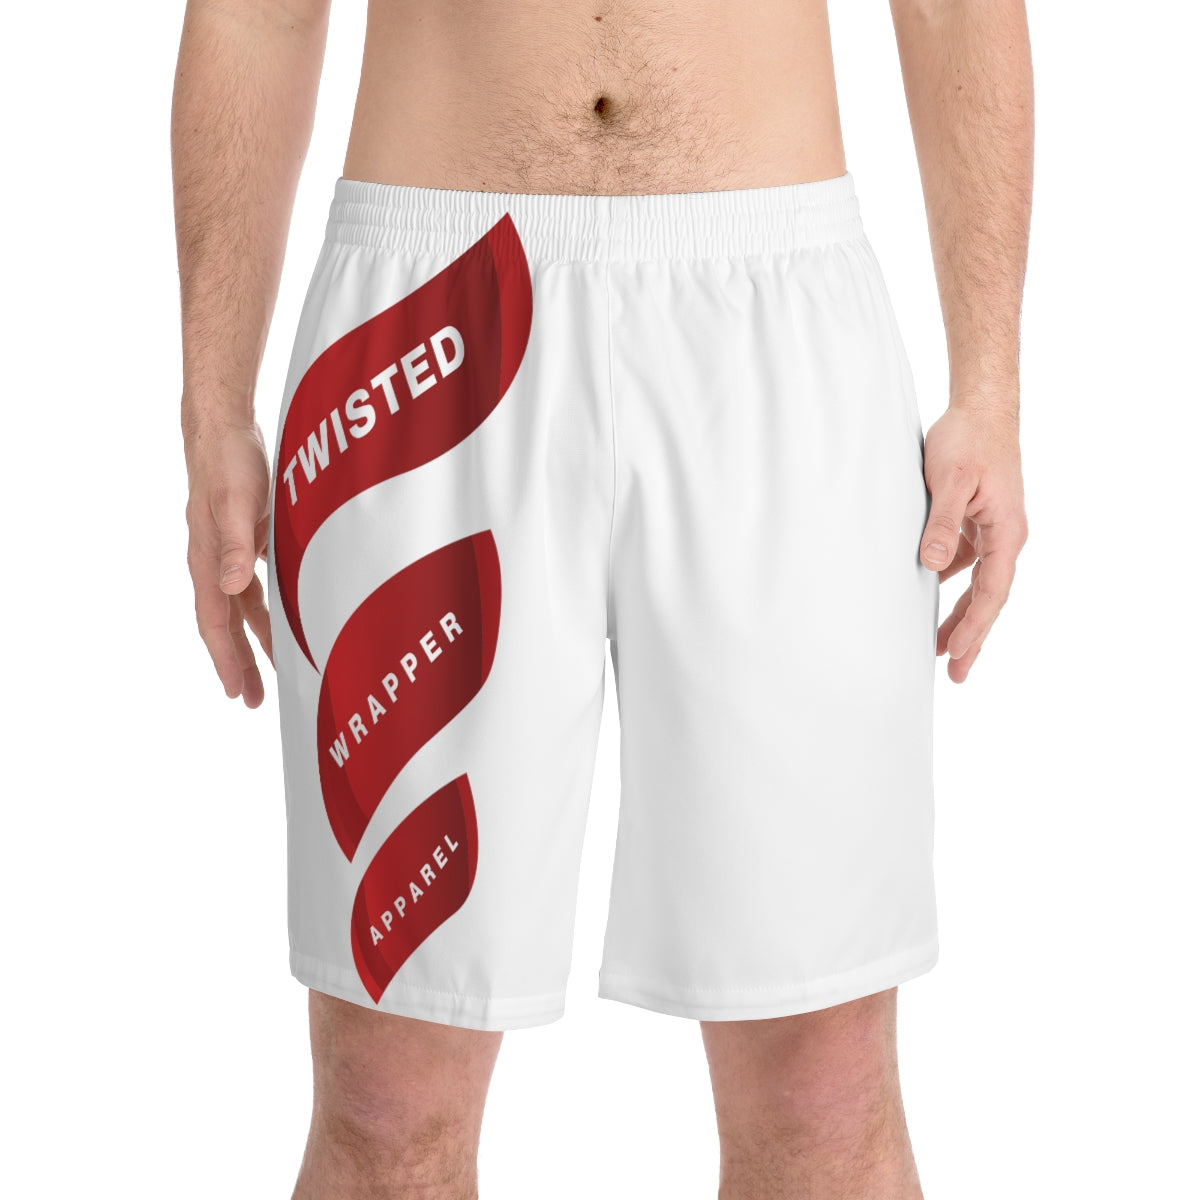 Men's Elastic Beach Shorts (AOP) - TwistedWrapper